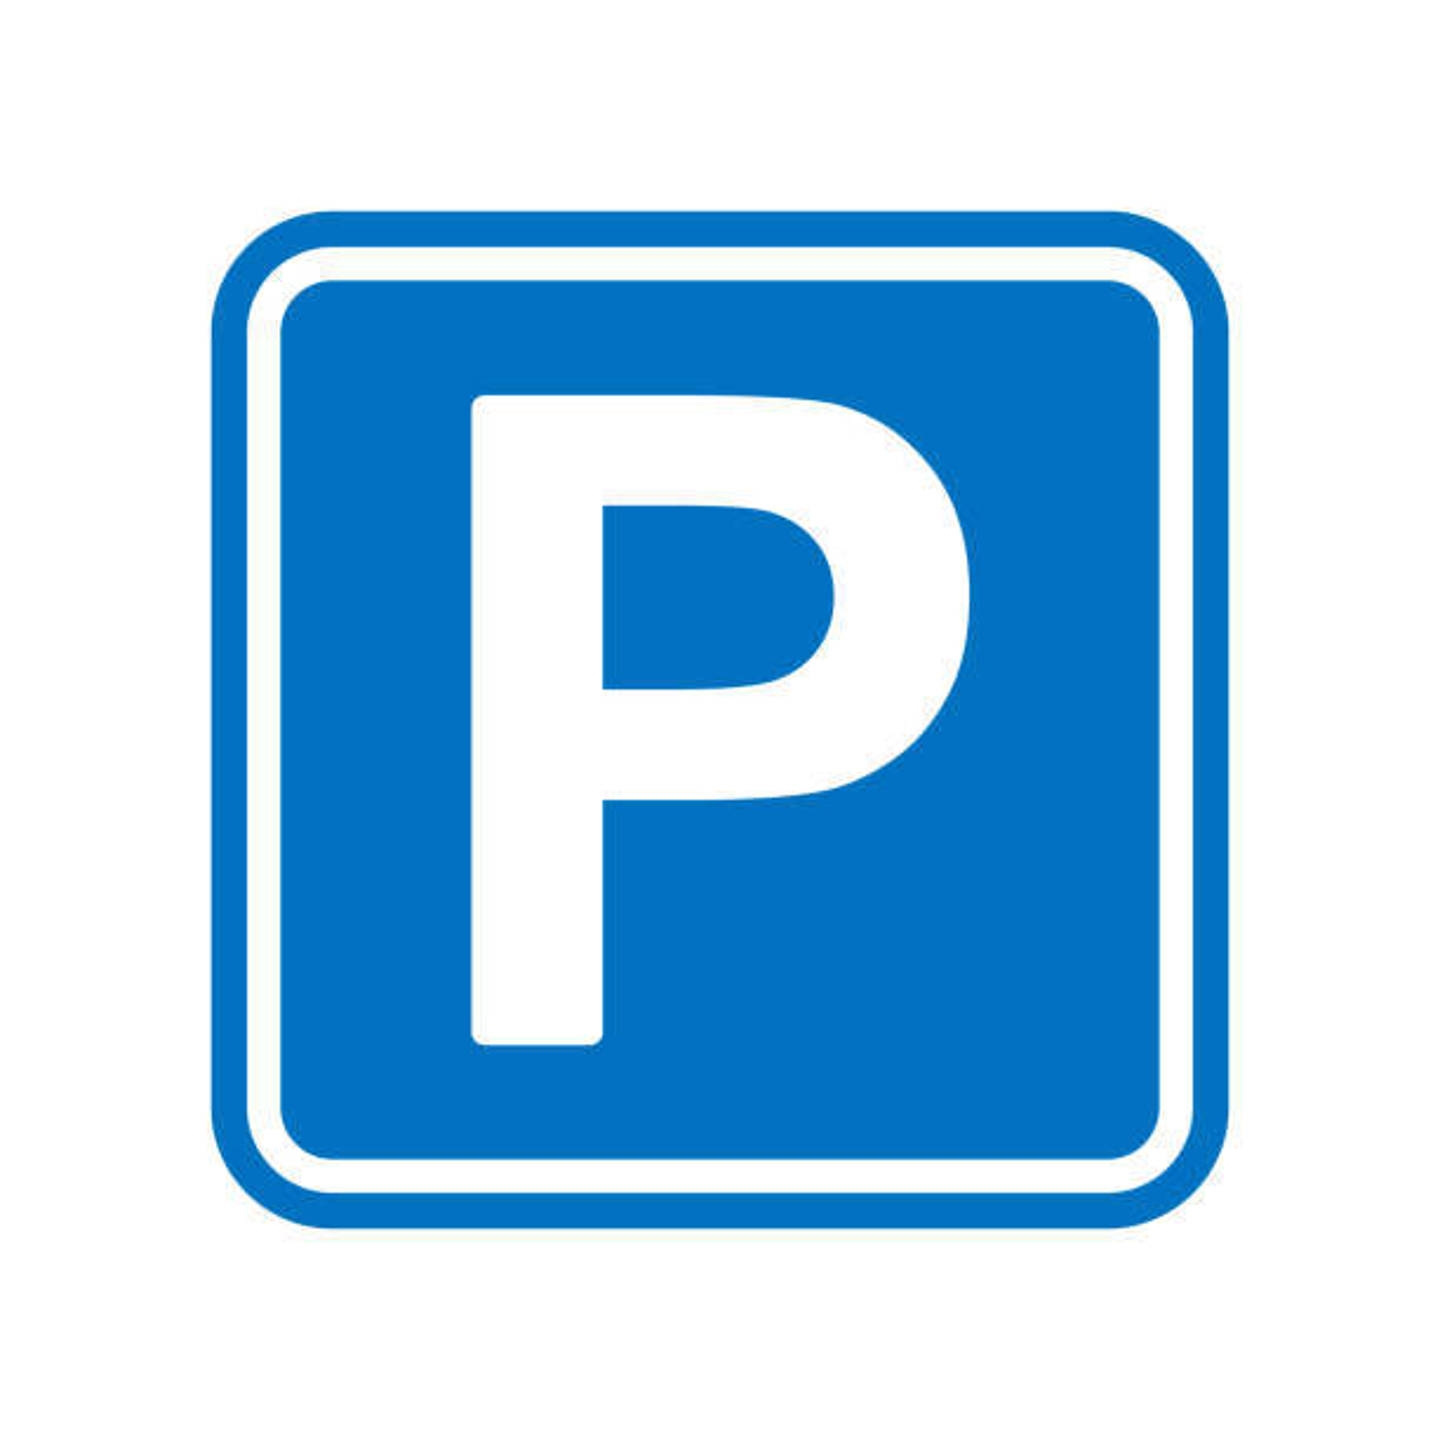 Parking / garage à vendre à Neder-Over-Heembeek 1120 16480.00€  chambres 12.50m² - annonce 41113